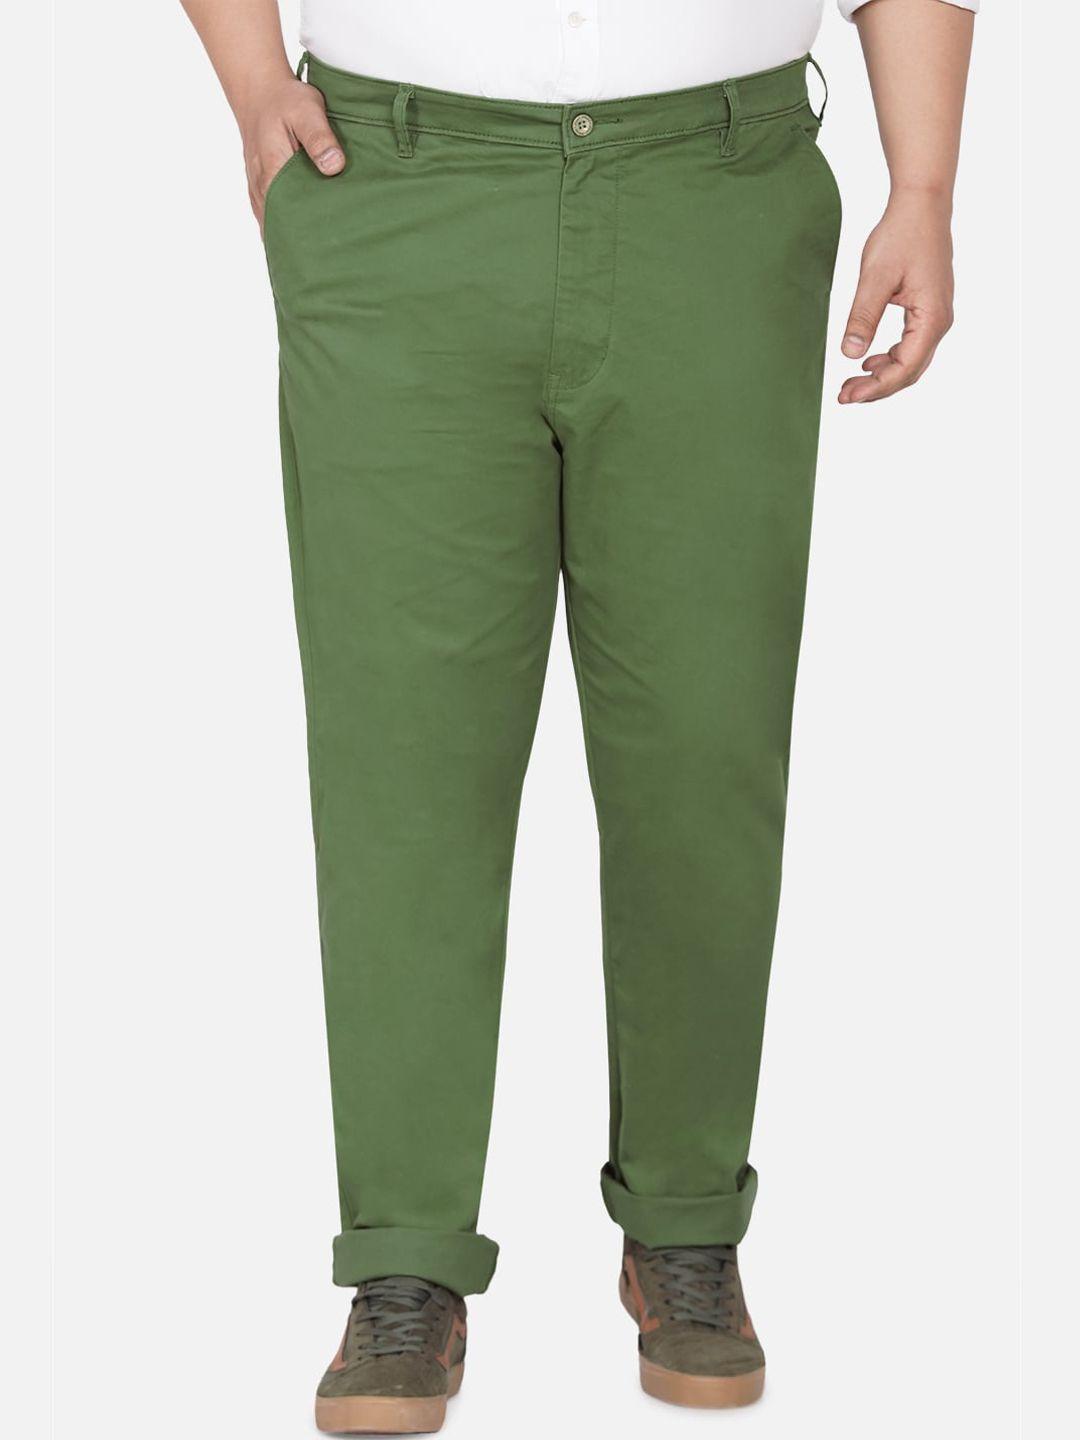 john pride men olive green trousers